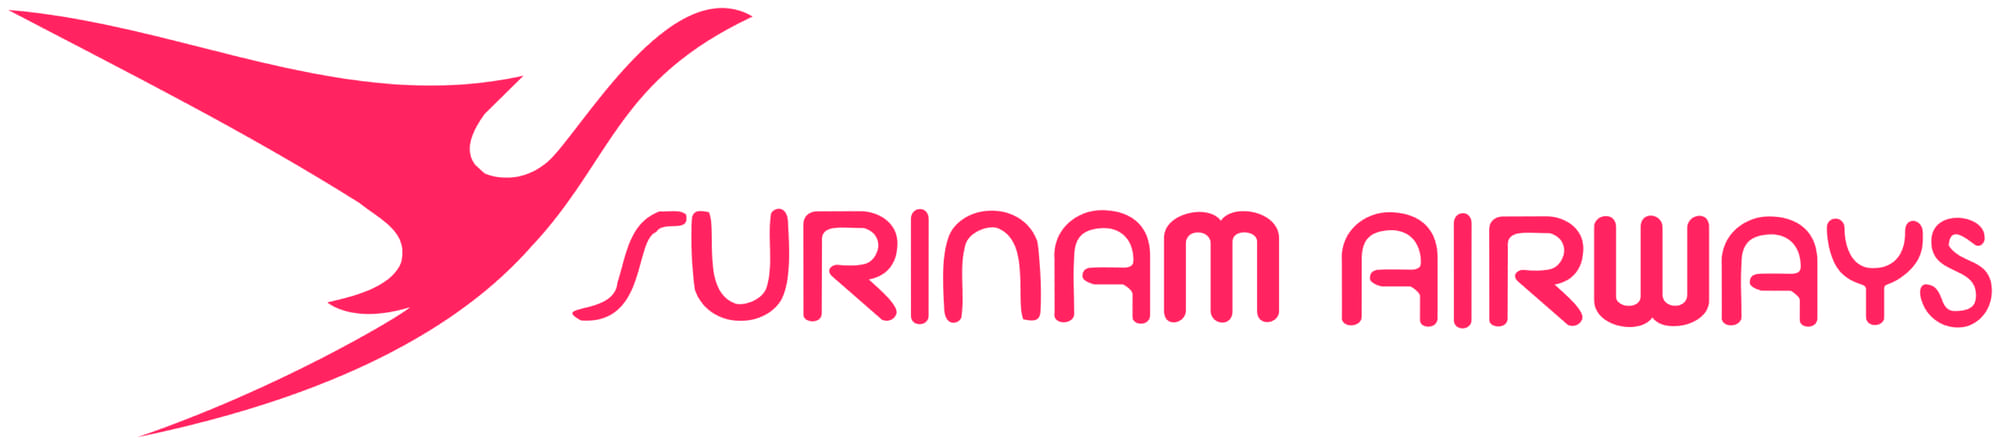 Surinam Airways logo